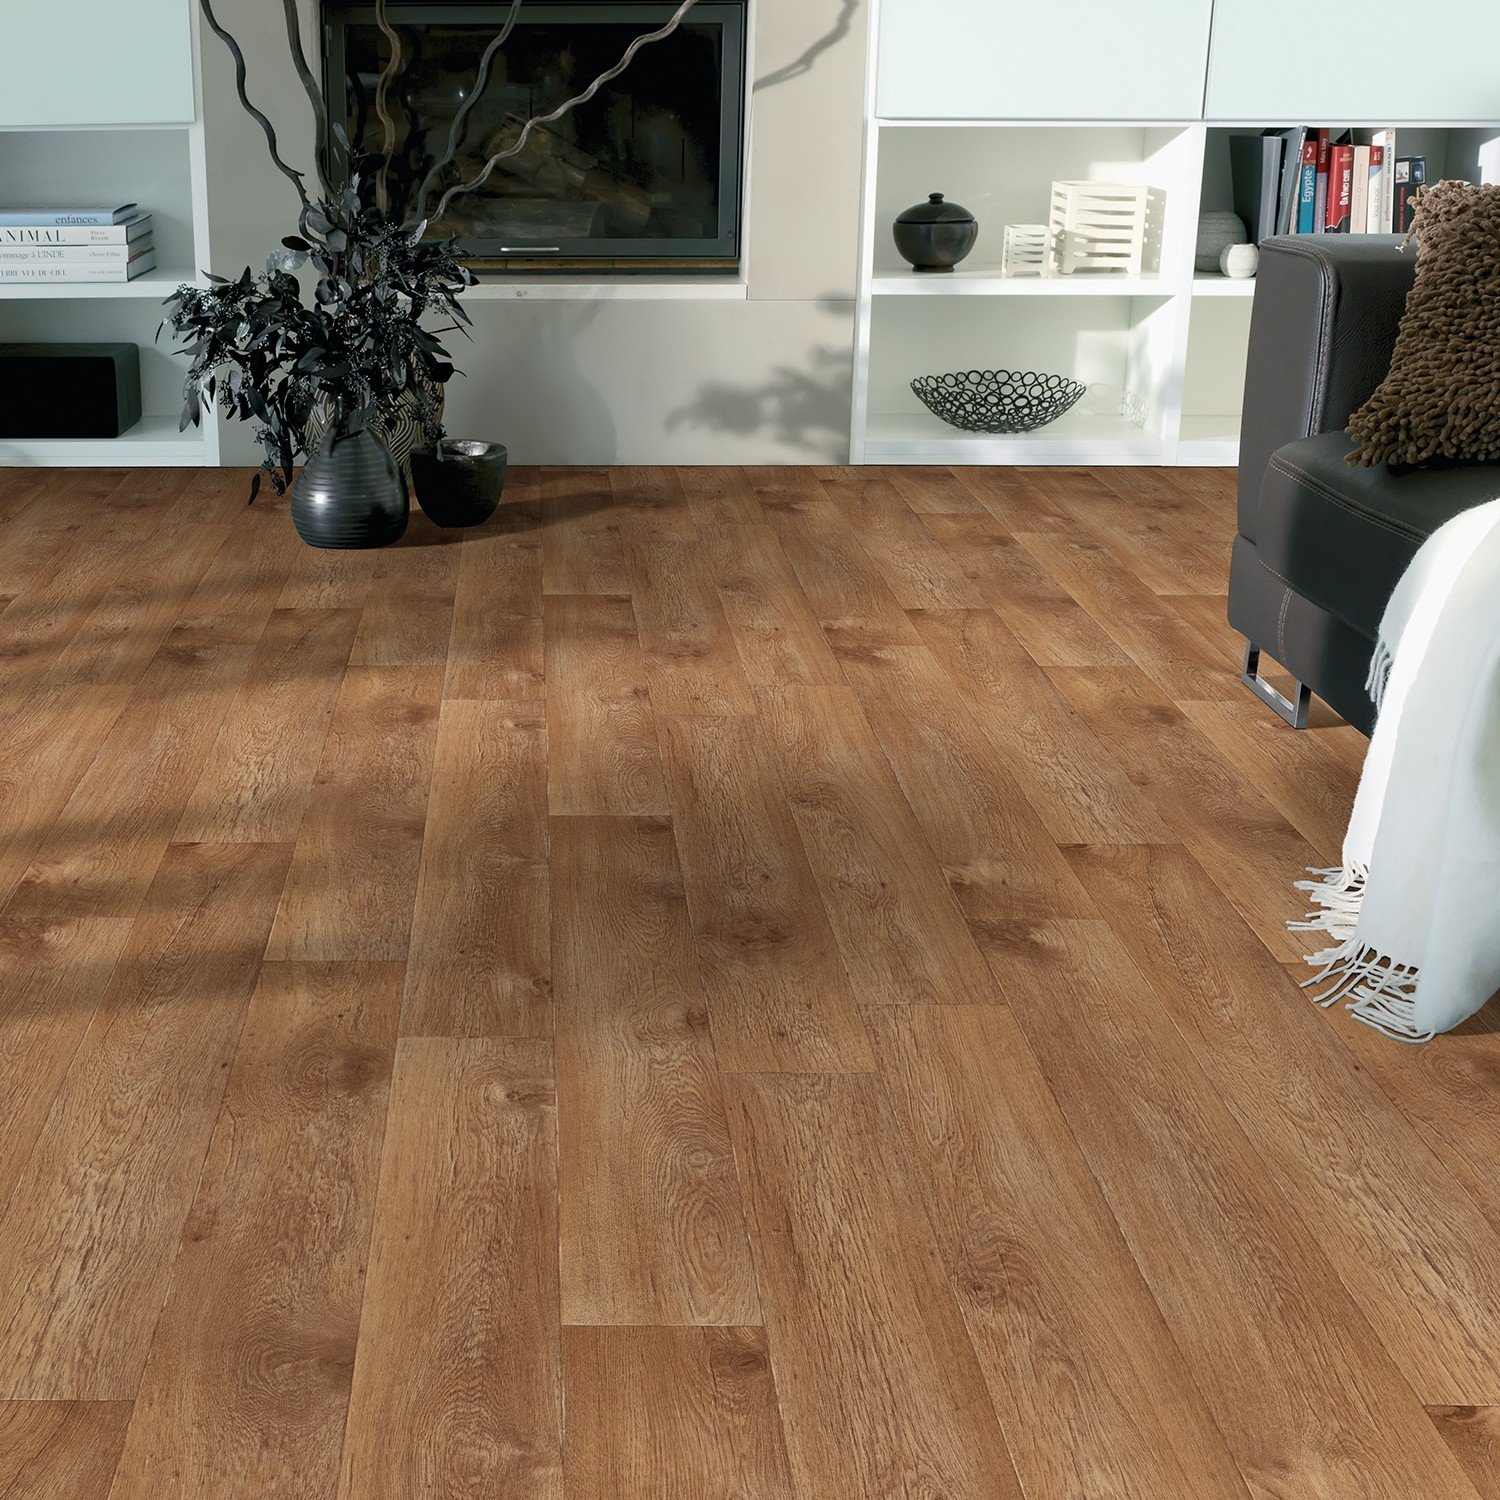 xrhino-style-moyen-wood-effect-vinylIs-vinyl-flooring-a-stylish-option-for-a-living-room-open-plan-kitchen-living-room-flooring